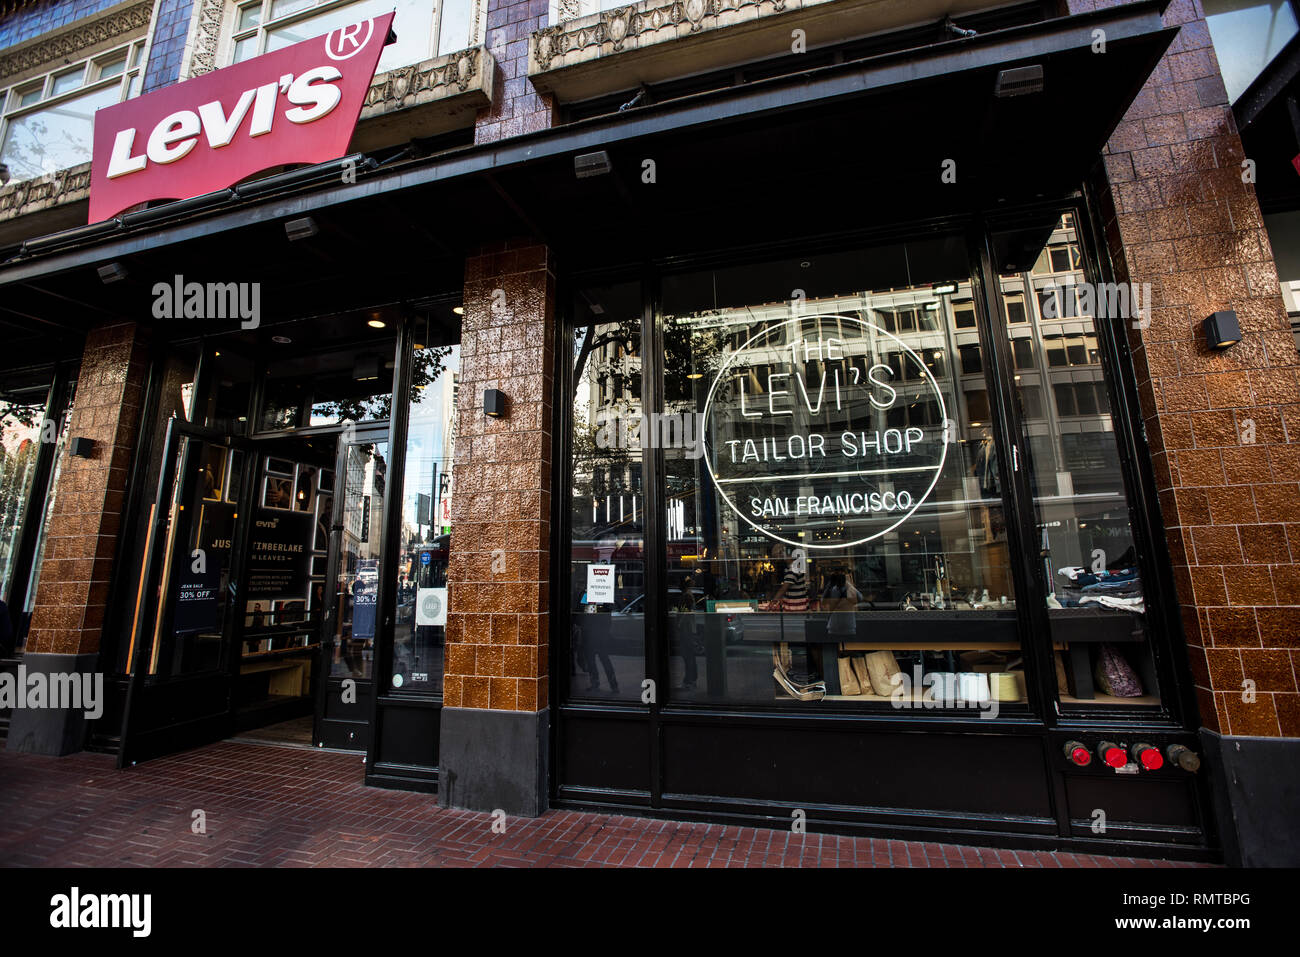 Levis tailor store. San Francisco Stock Photo - Alamy